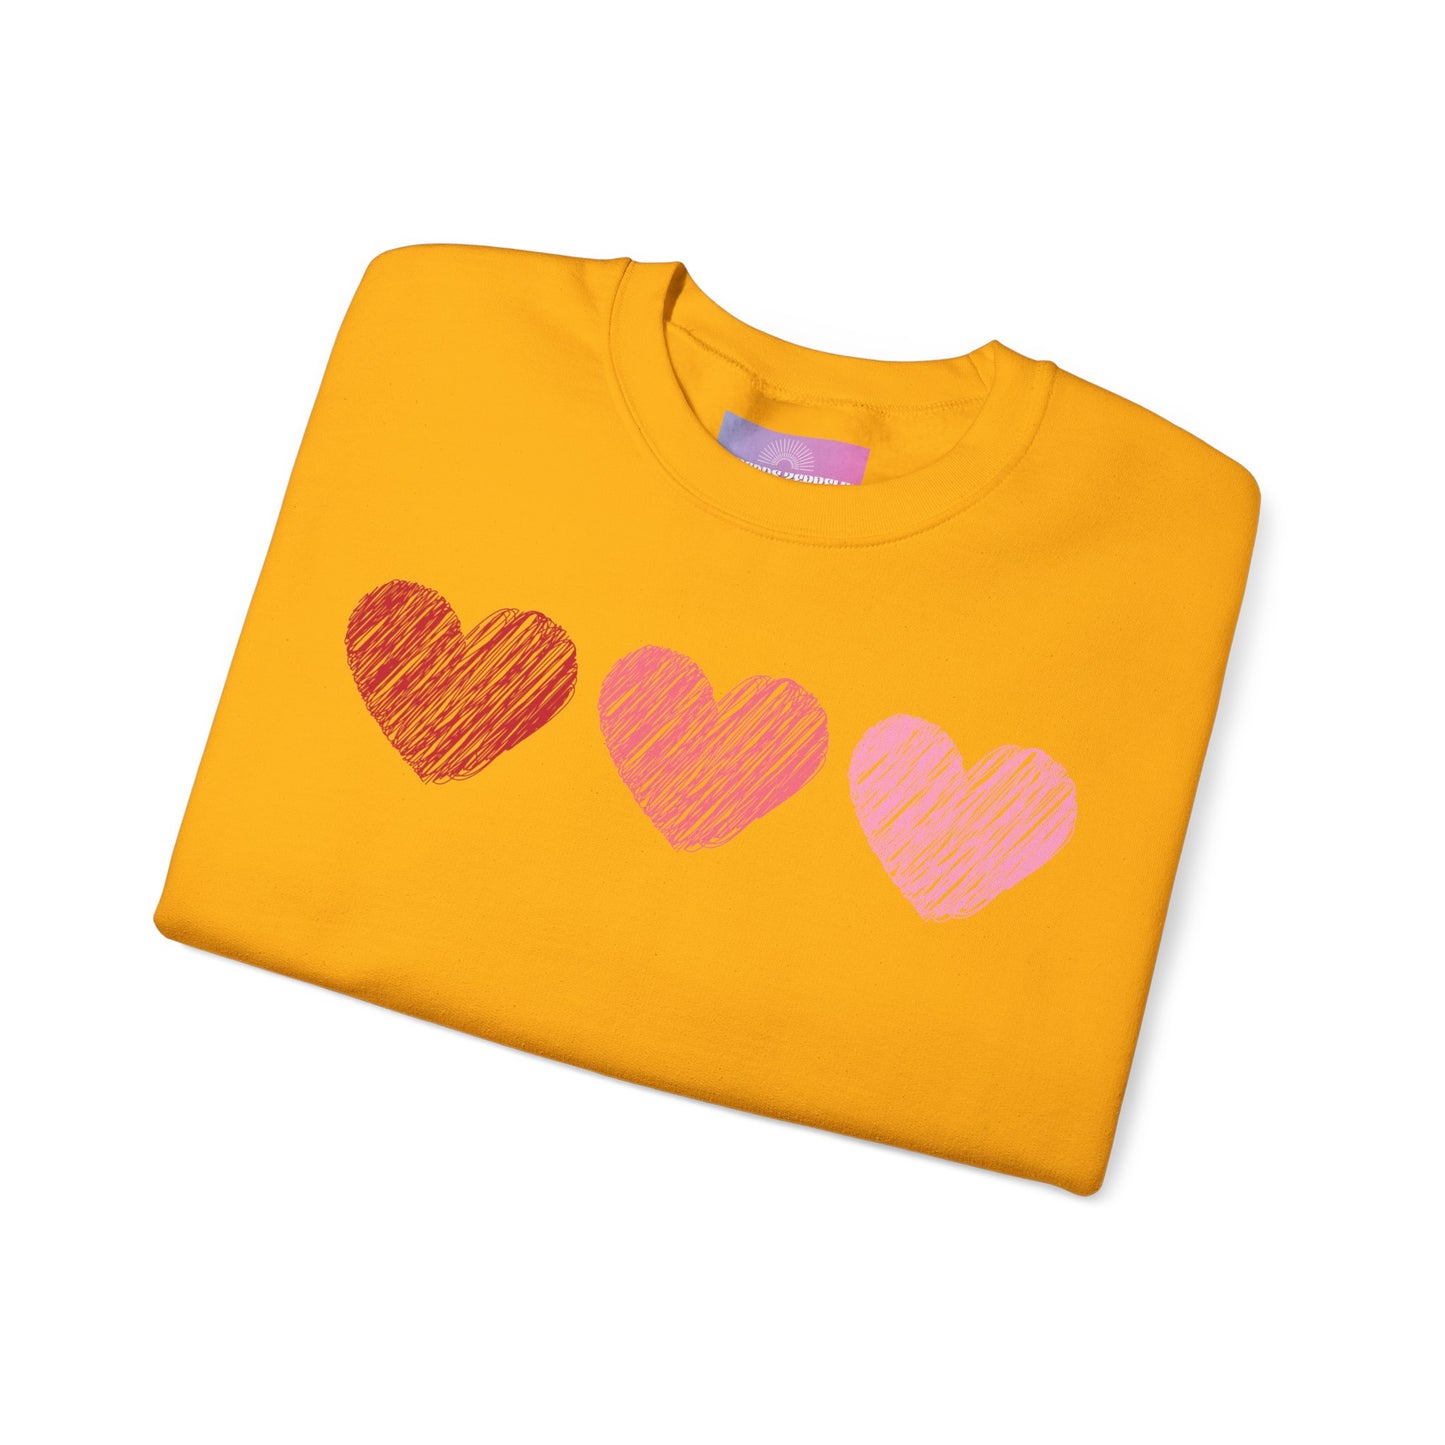 Valentines Day Hearts Sweatshirt, Funny Valentines Day Crewneck Sweater, Gift for bestie, Anti Valentines Day, Cupids Arrow, Gift for her